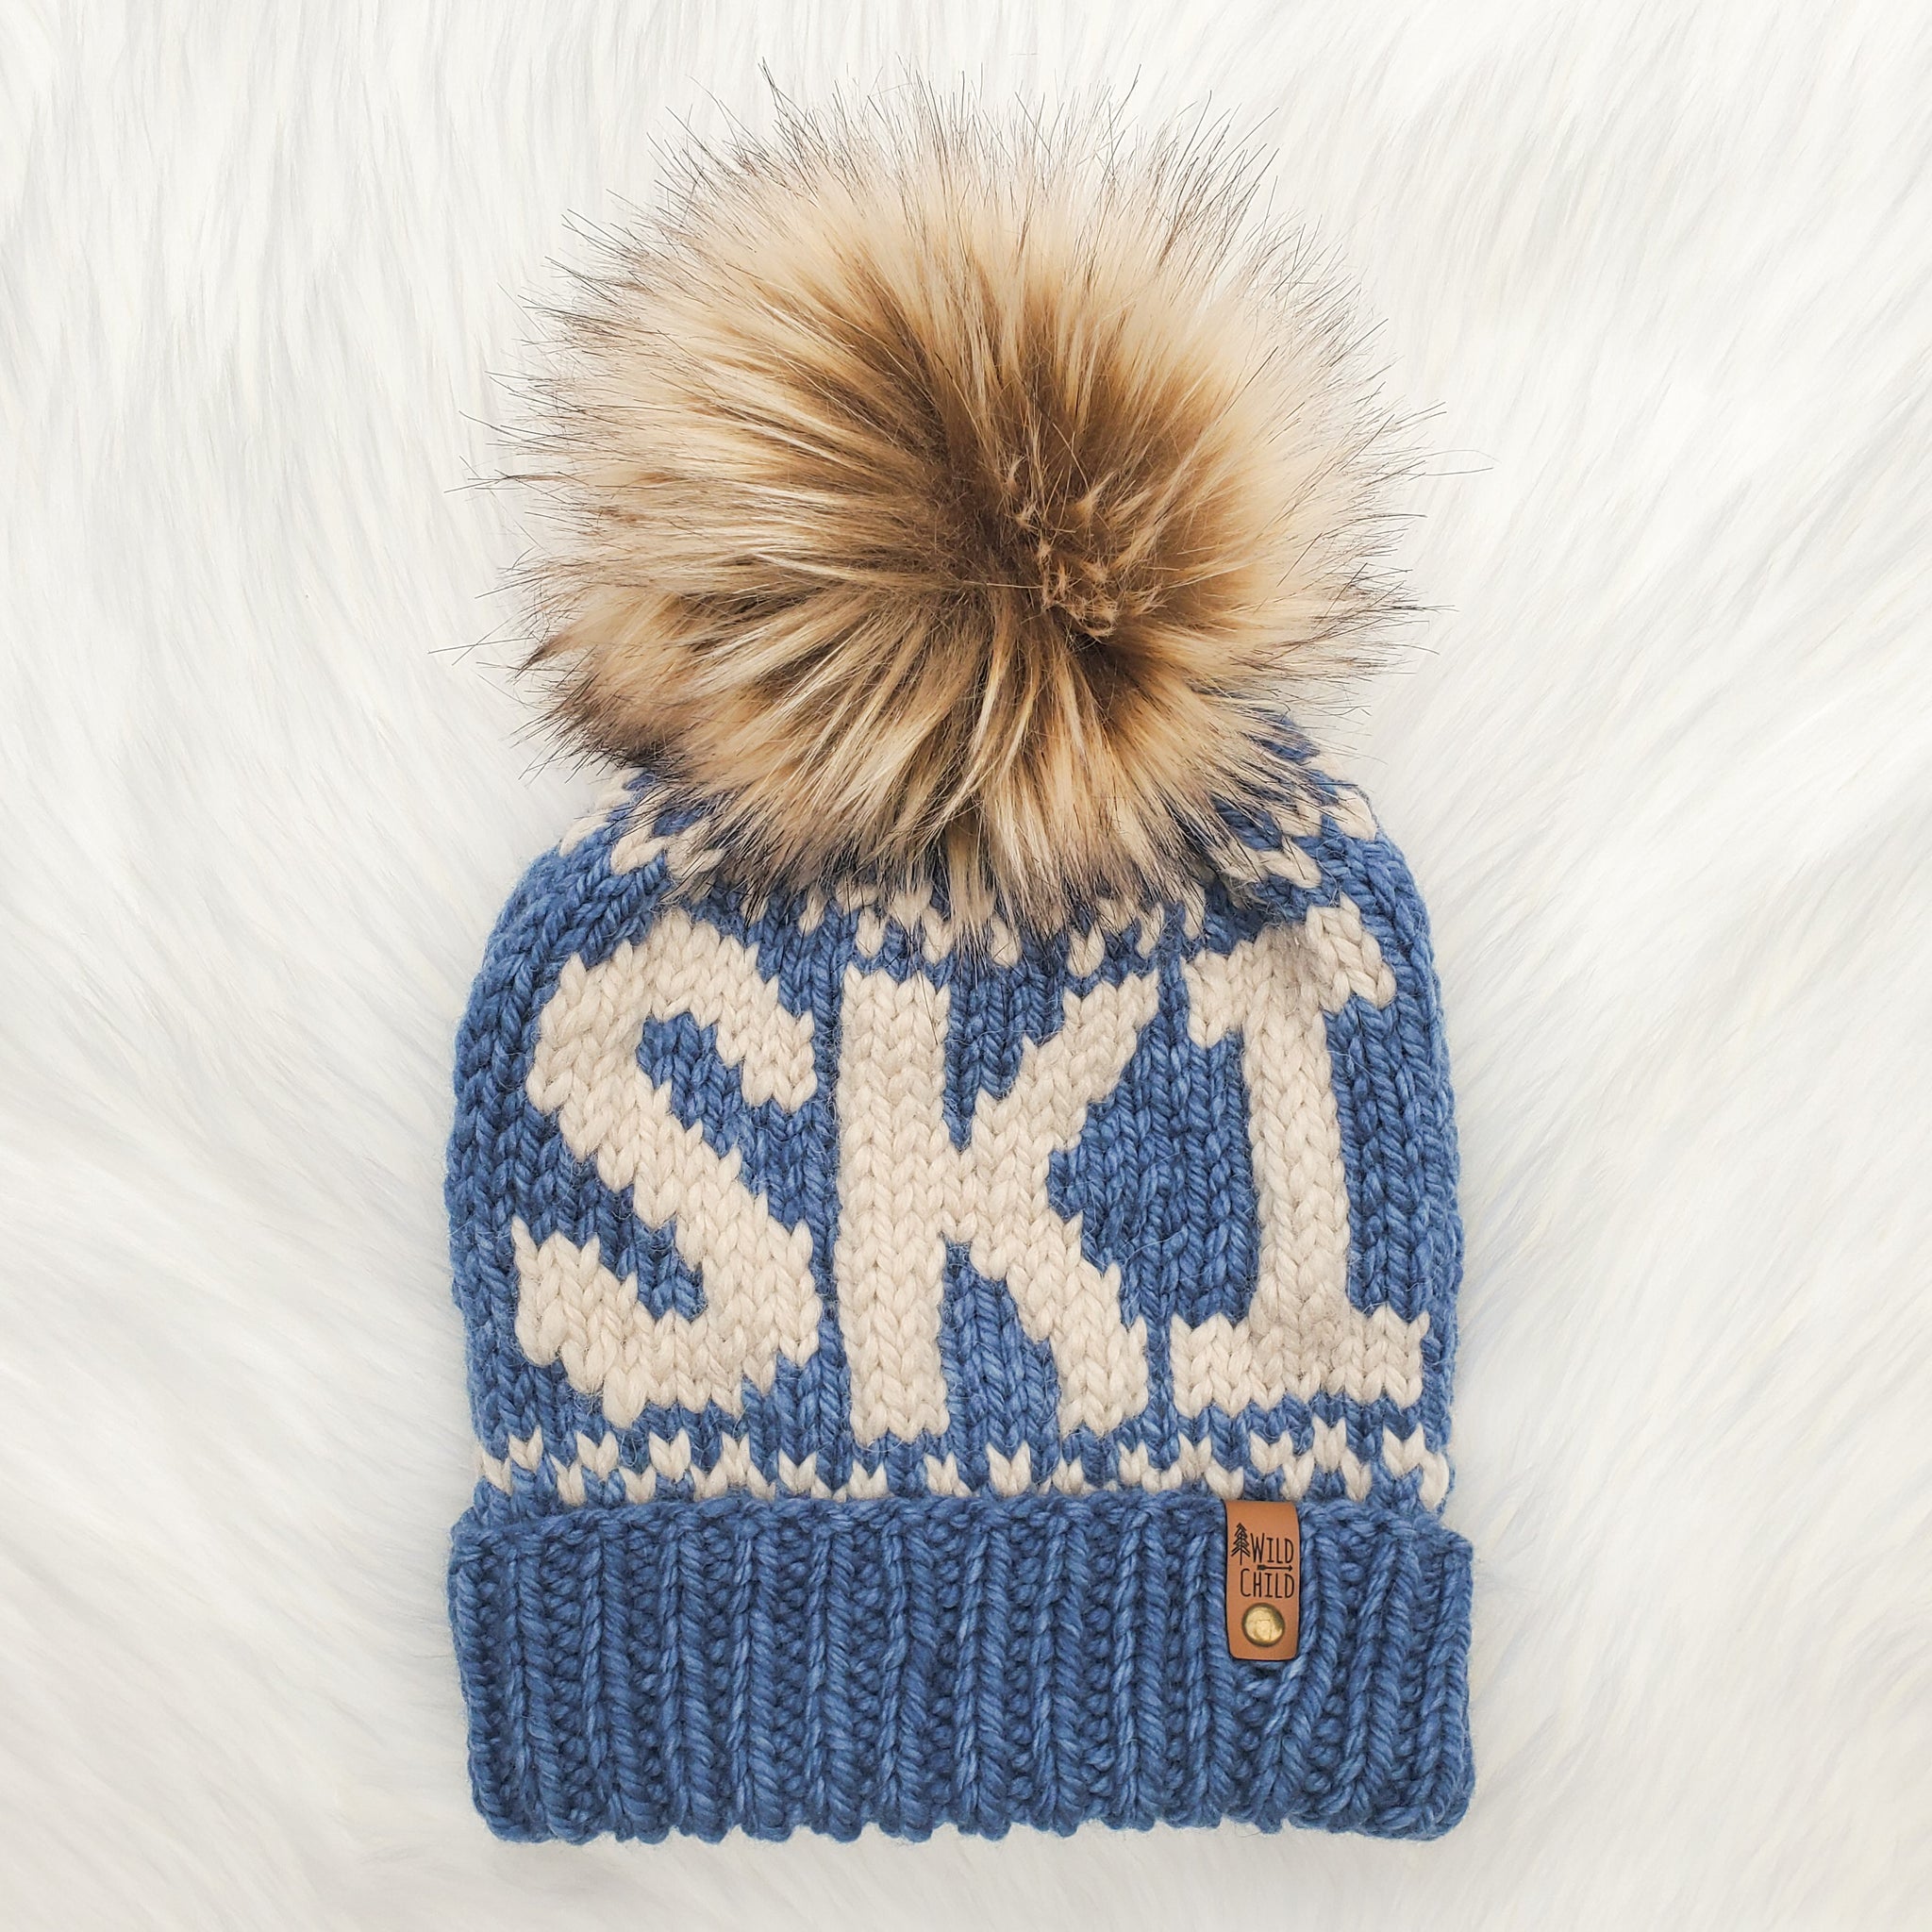 SKI Hat - Ready to Ship - Adult Size - Wild Child Designs